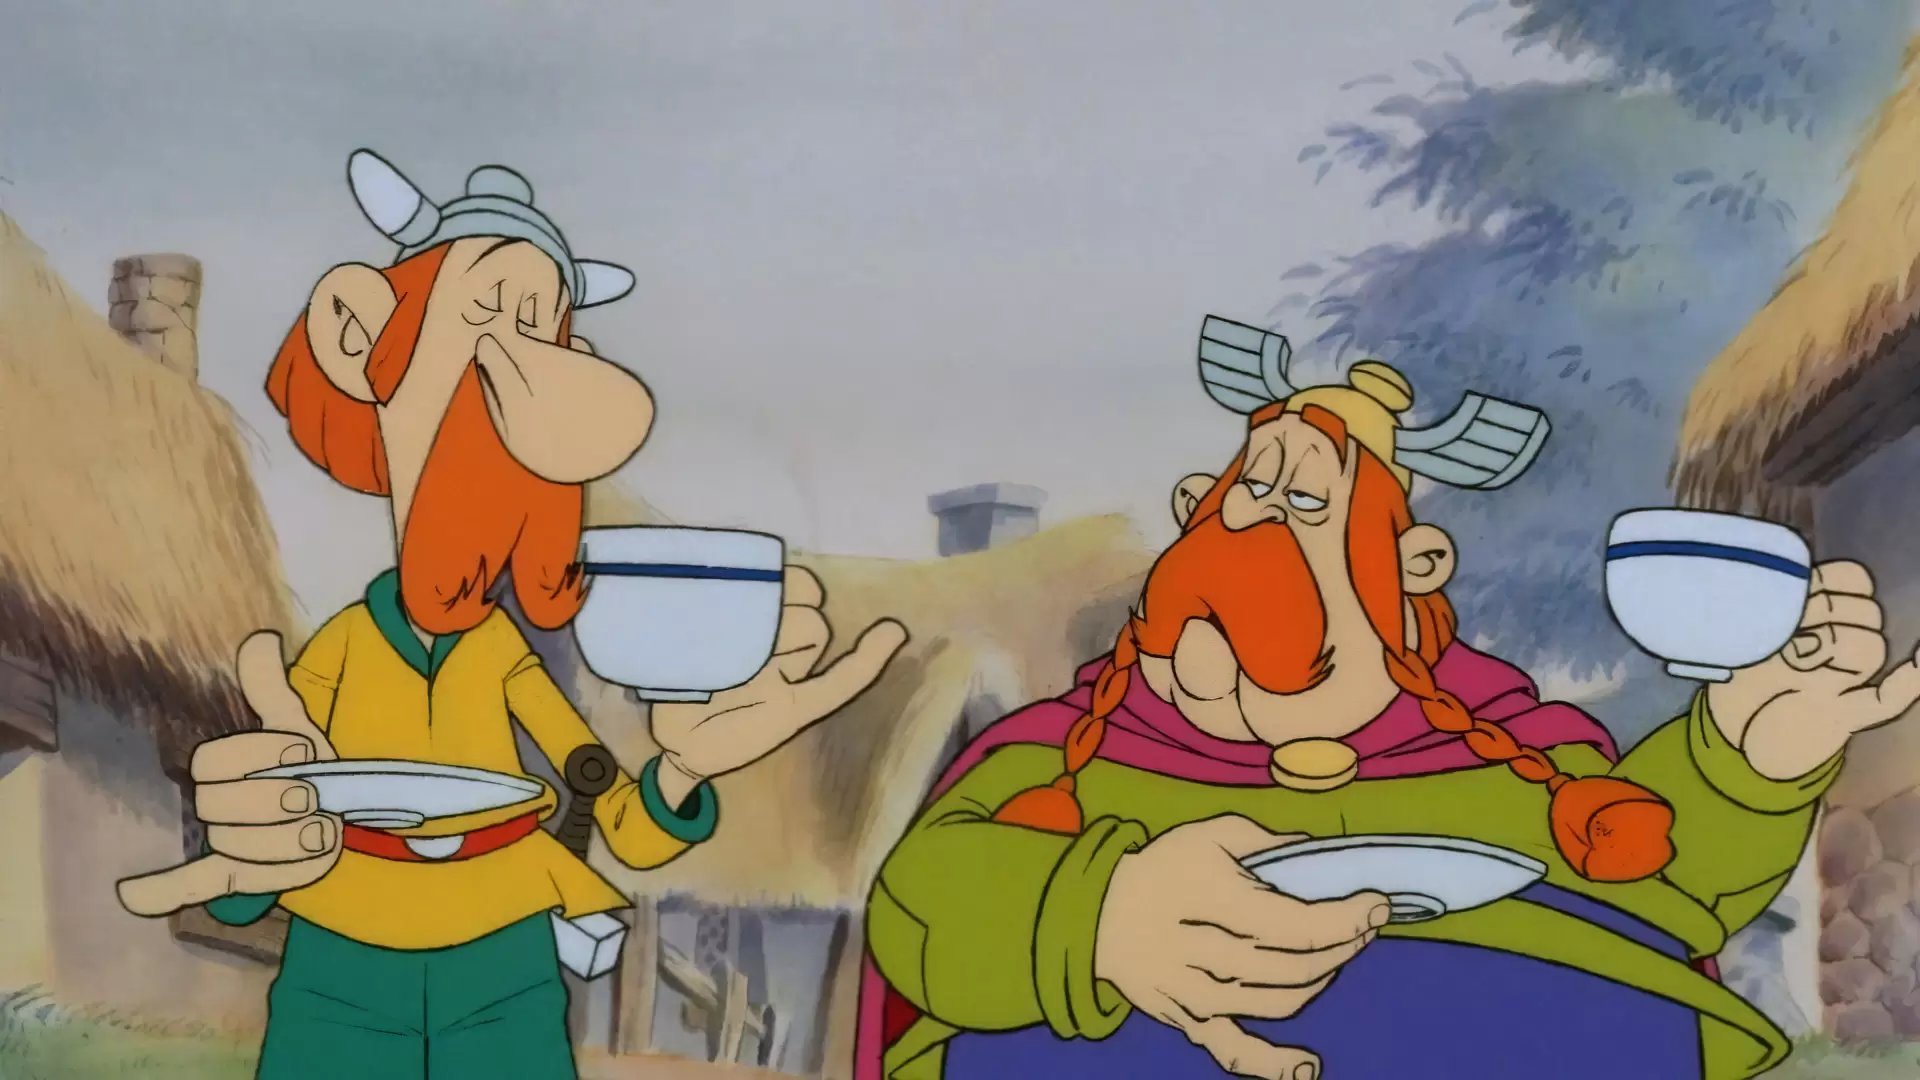 دانلود انیمیشن Asterix in Britain 1986